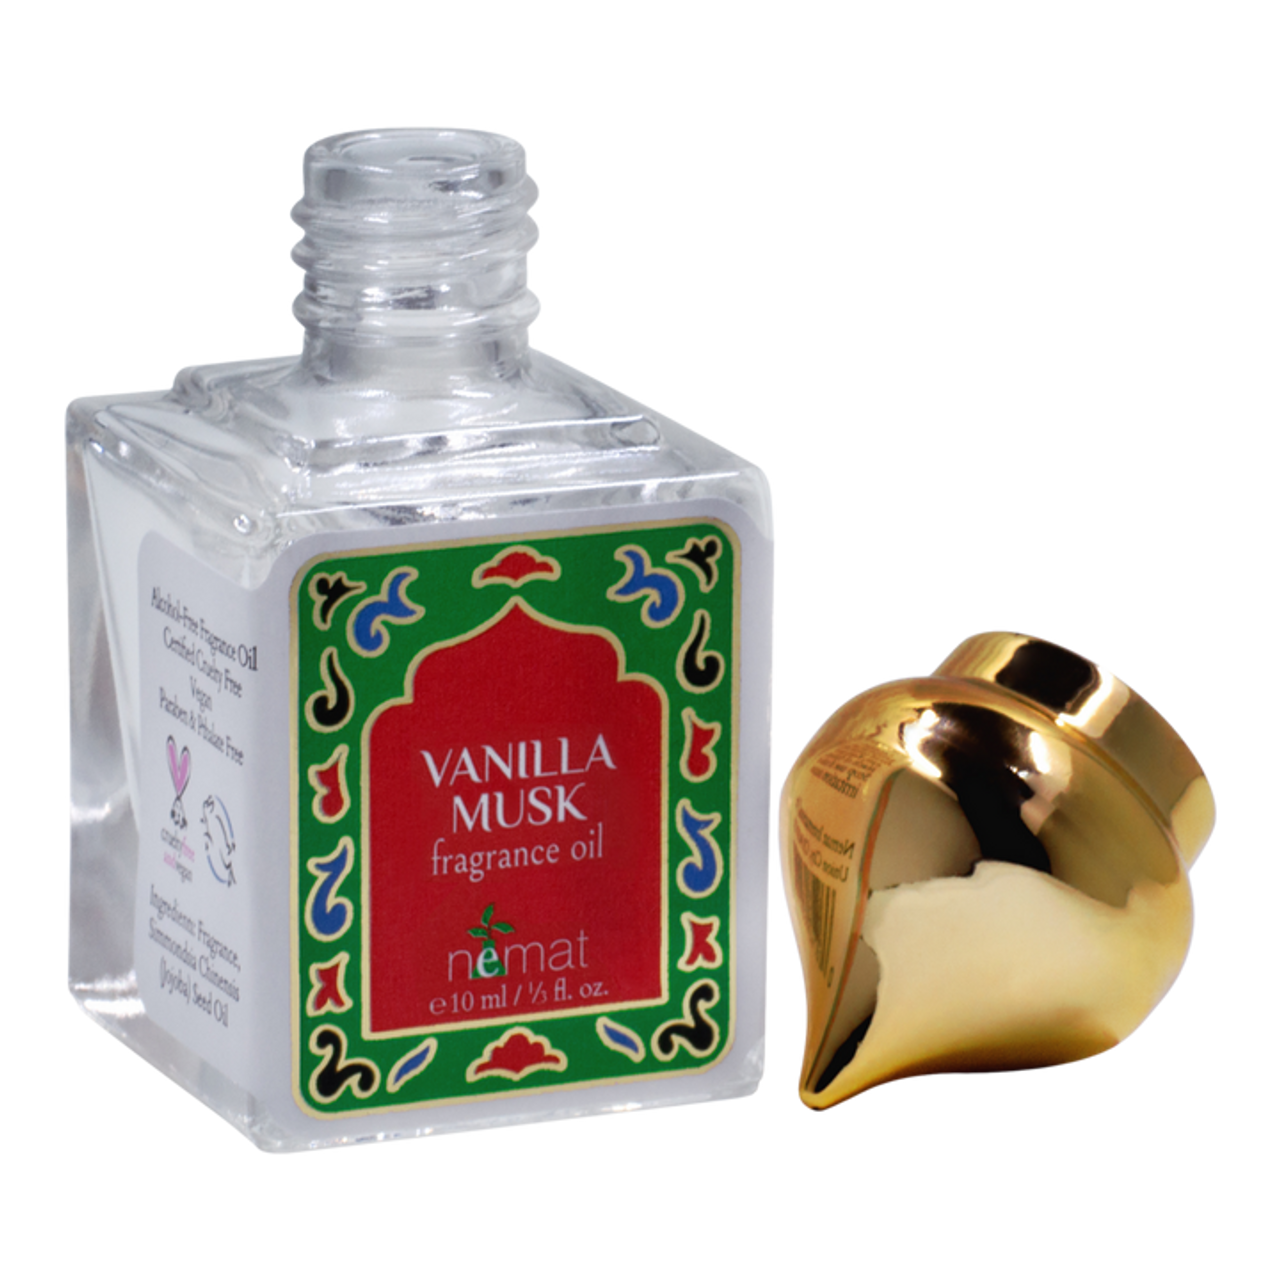 Testing the Vanilla Musk Oil from Nemat 😍😍😍 #vanillamuskoil #vanill, nemat perfume oil